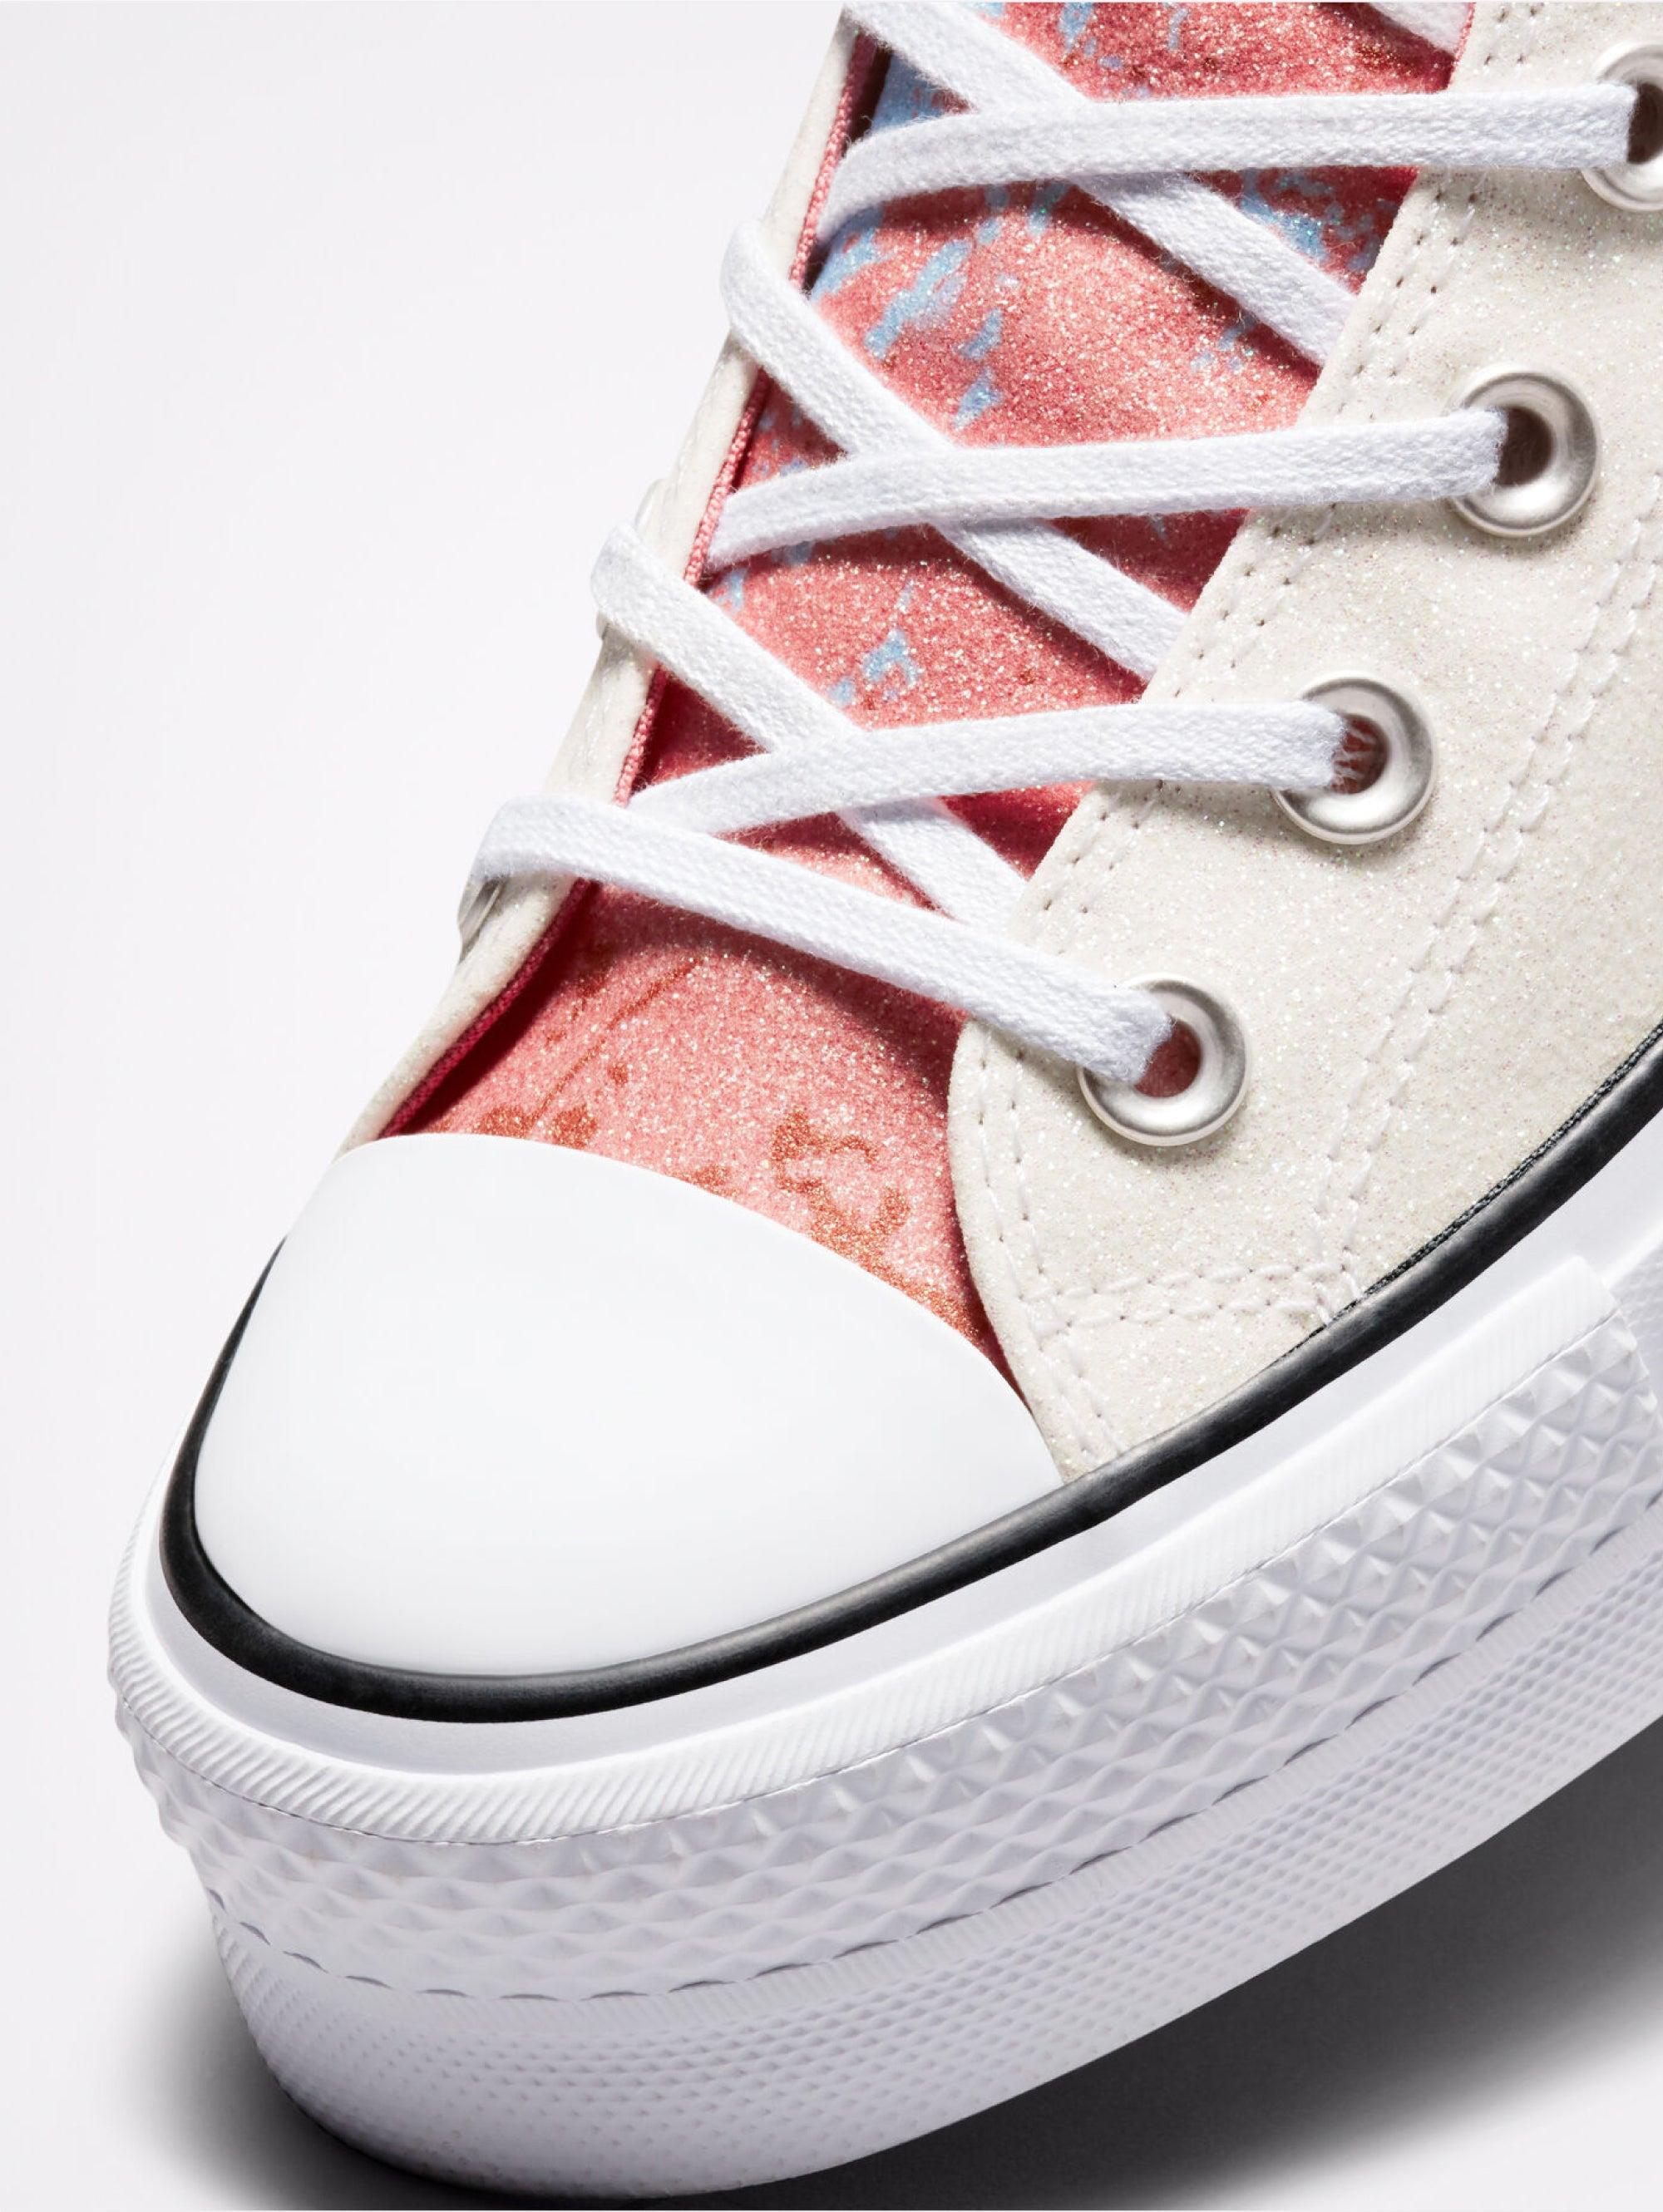 Converse Rubber Sneakers Alte Platform Glitter White Pink | Lyst